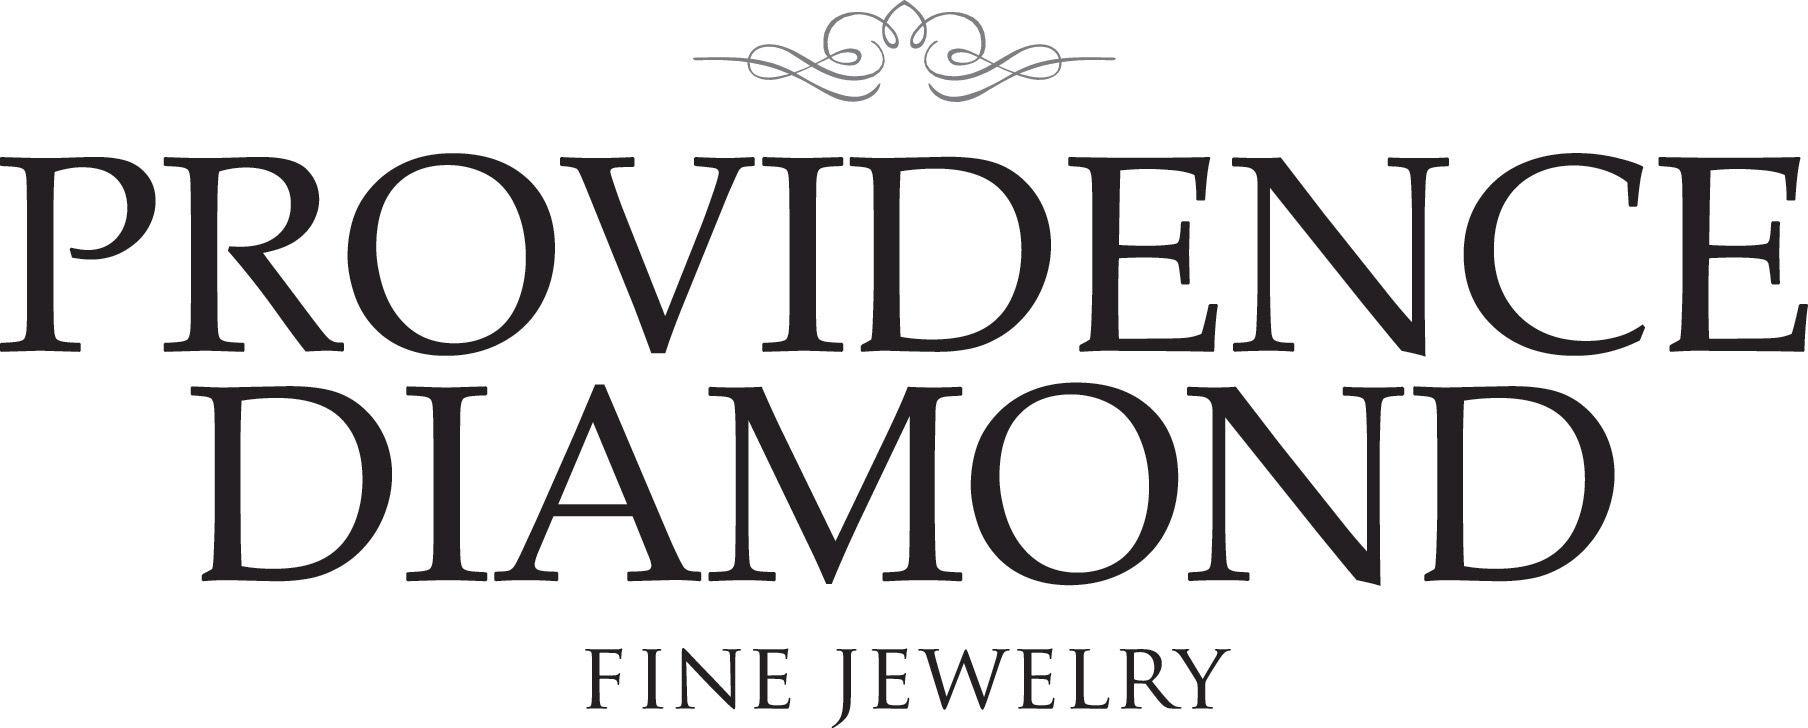 Dimond Co Logo - Melissa Hardesty - Logo Design: Providence Diamond Co.